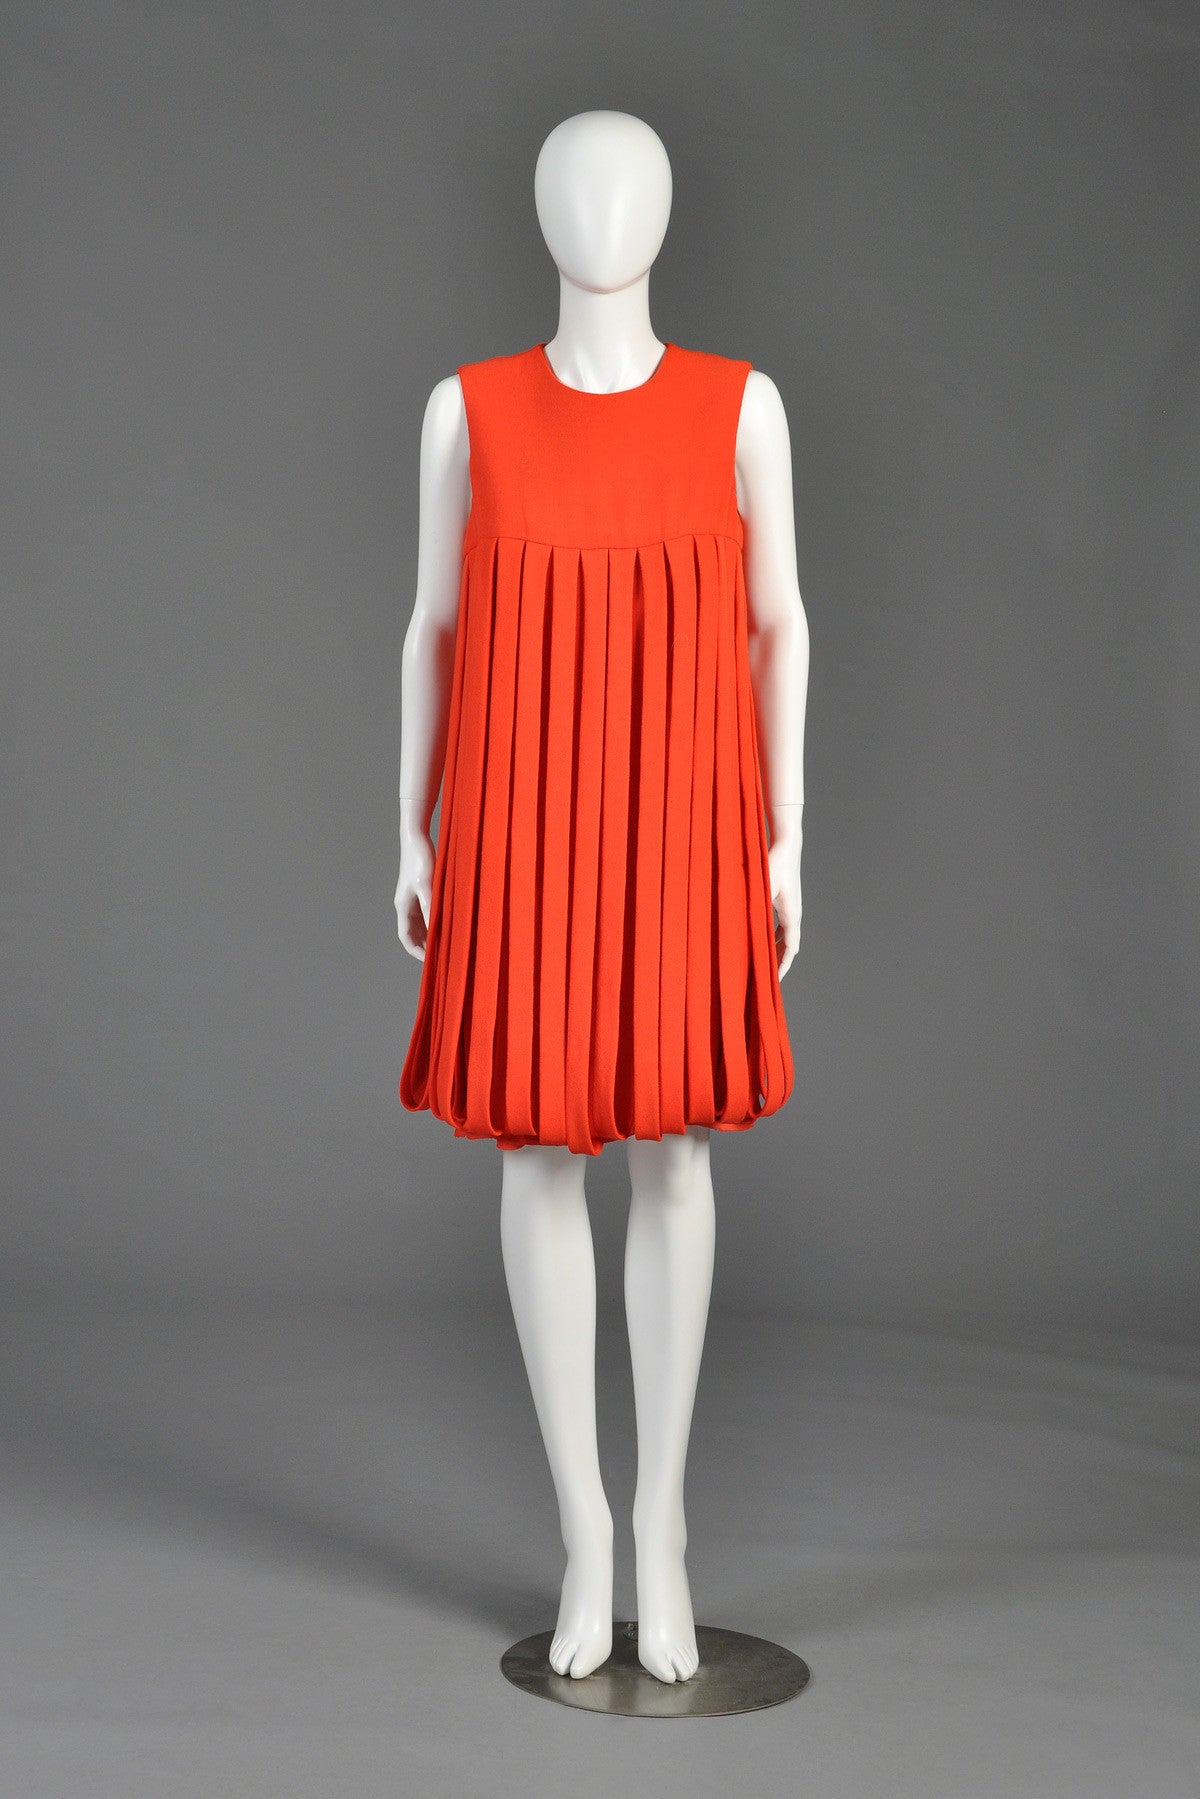 Iconic Vintage 1969 Pierre Cardin Carwash Dress